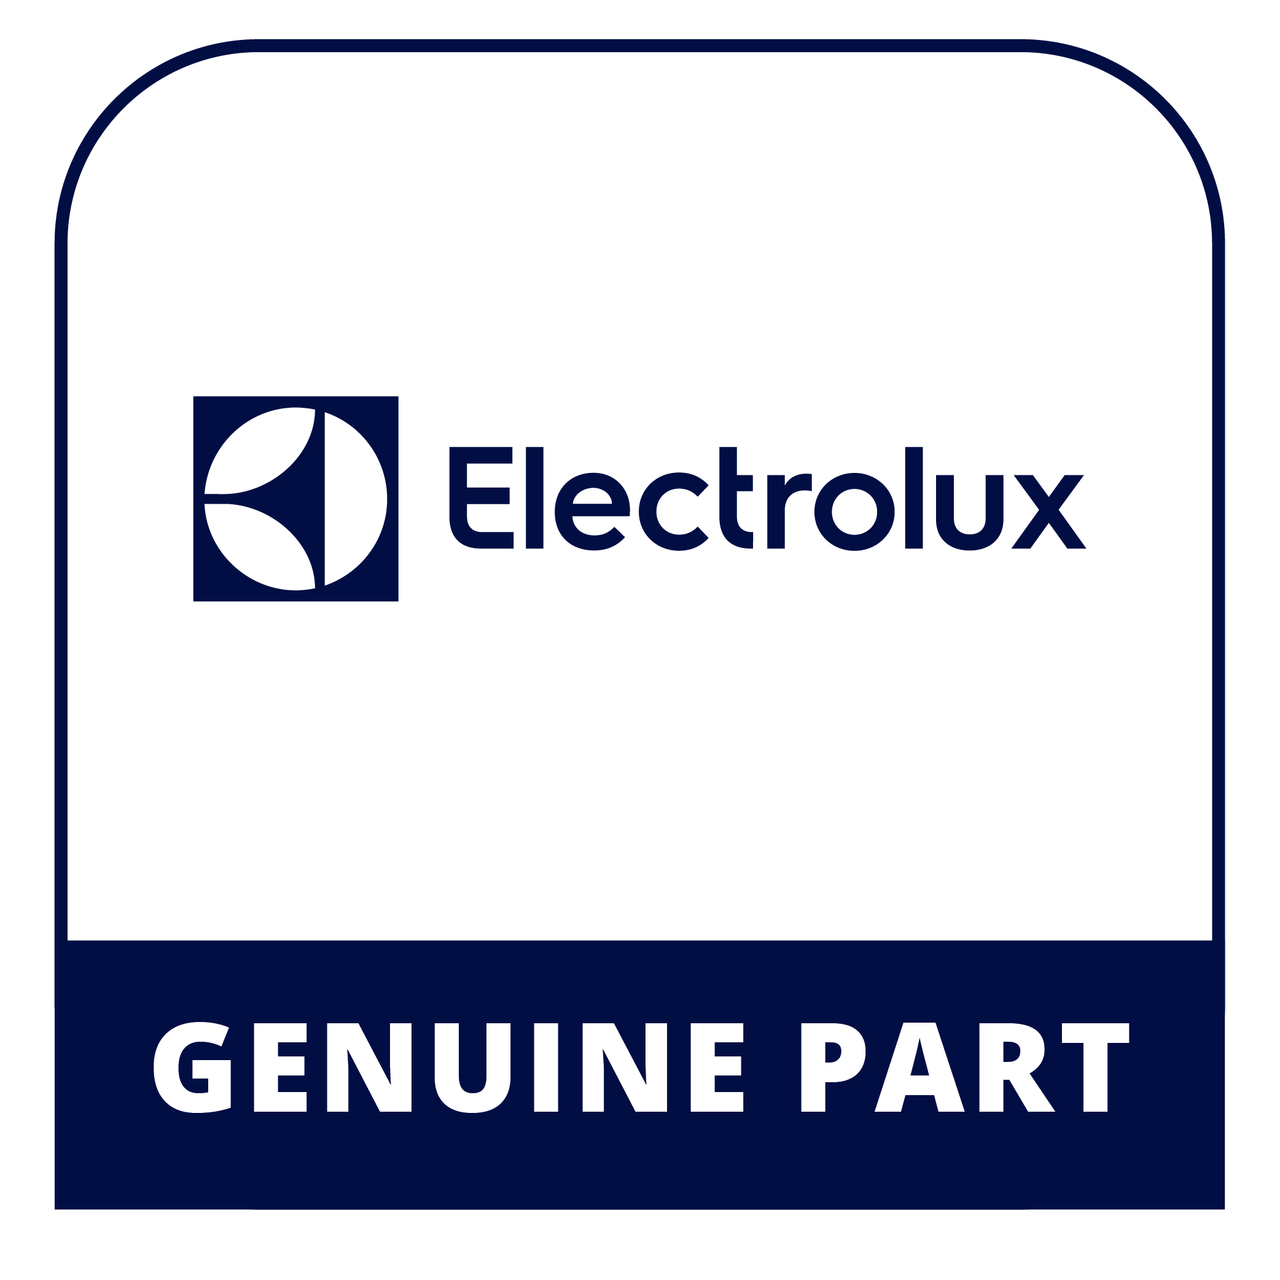 Frigidaire - Electrolux 134114700 Trim Plate - Genuine Electrolux Part